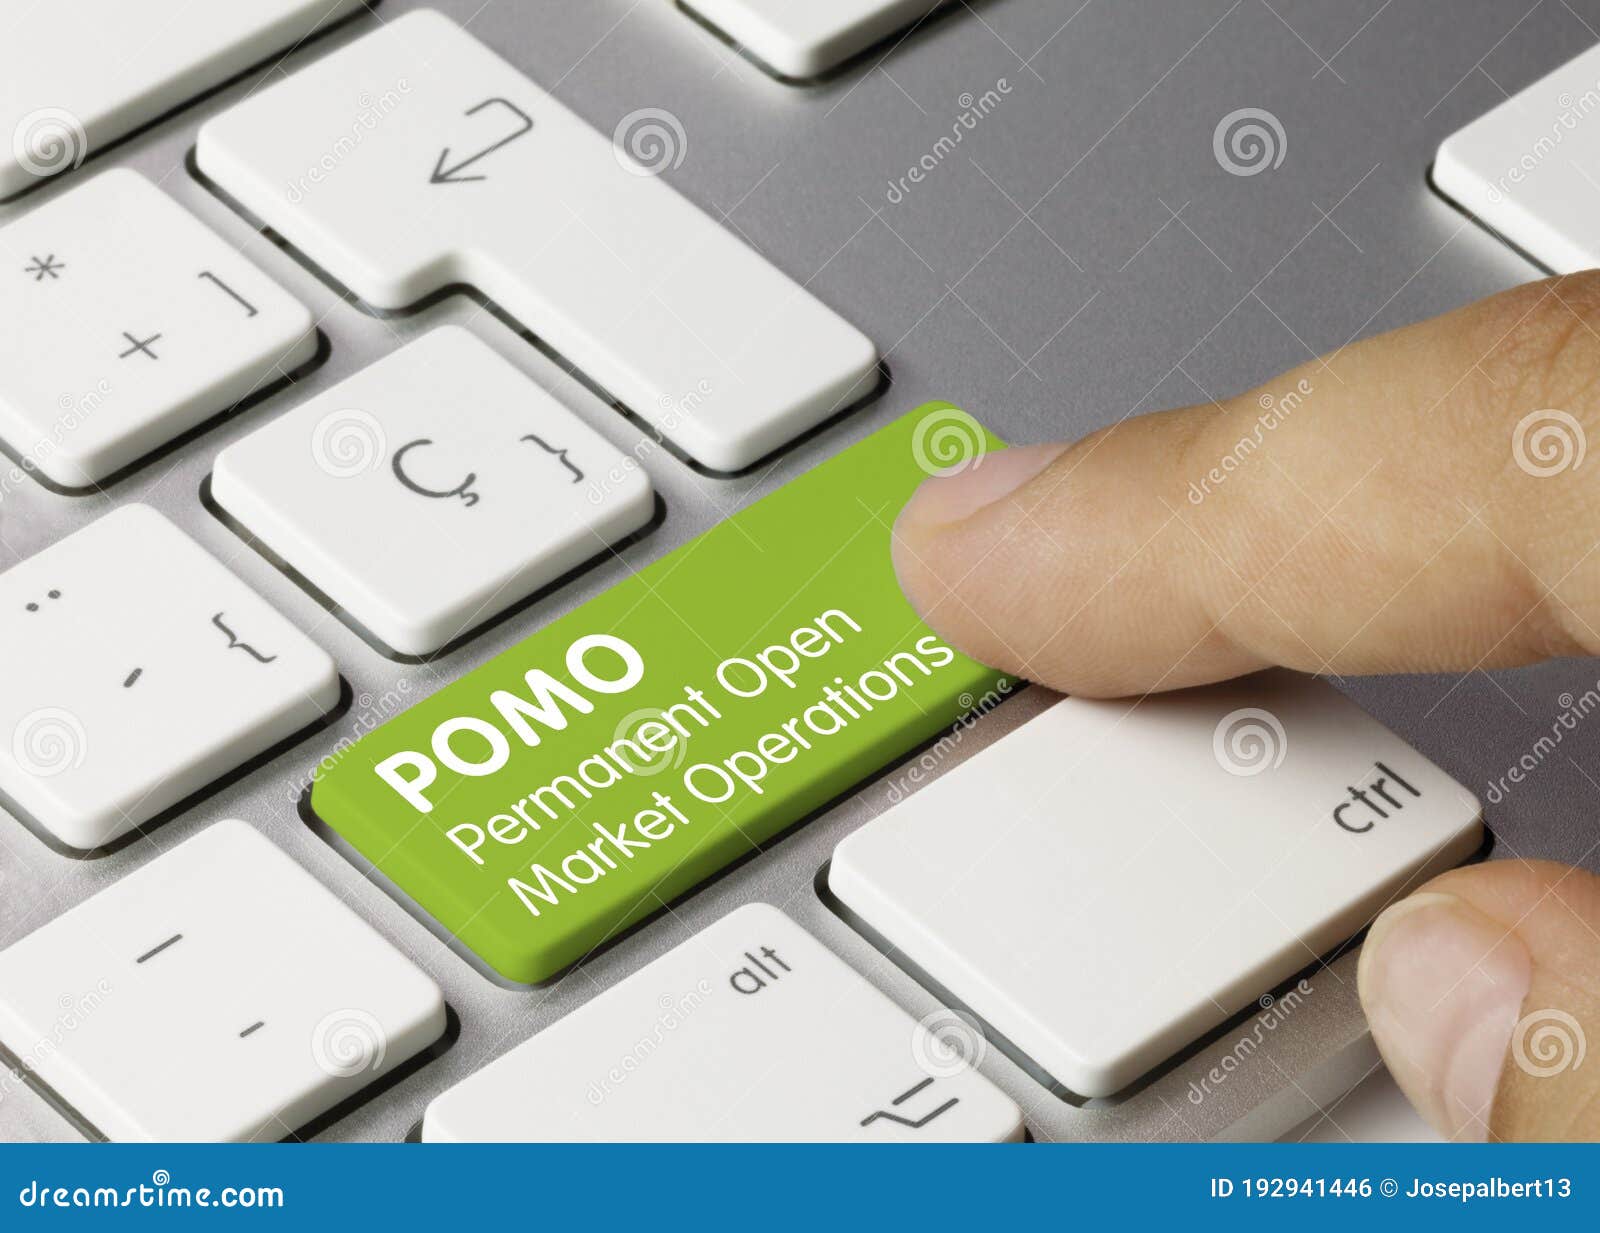 pomo permanent open market operations - inscription on green keyboard key